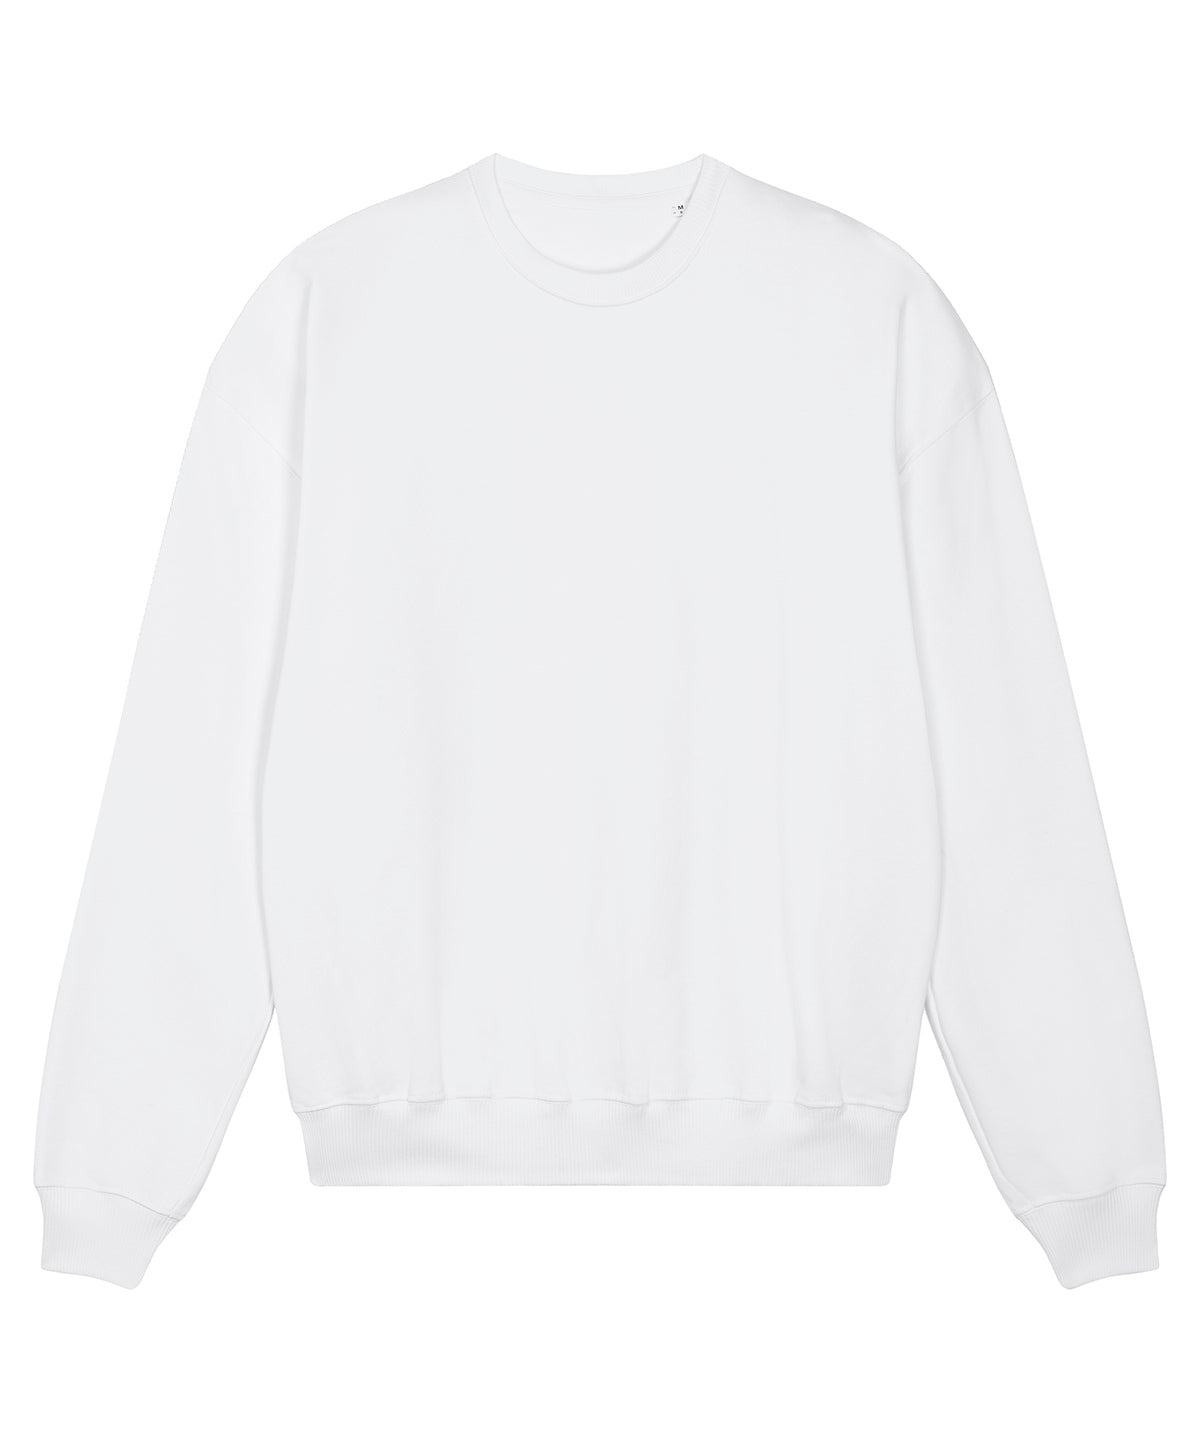 Unisex Ledger dry sweatshirt